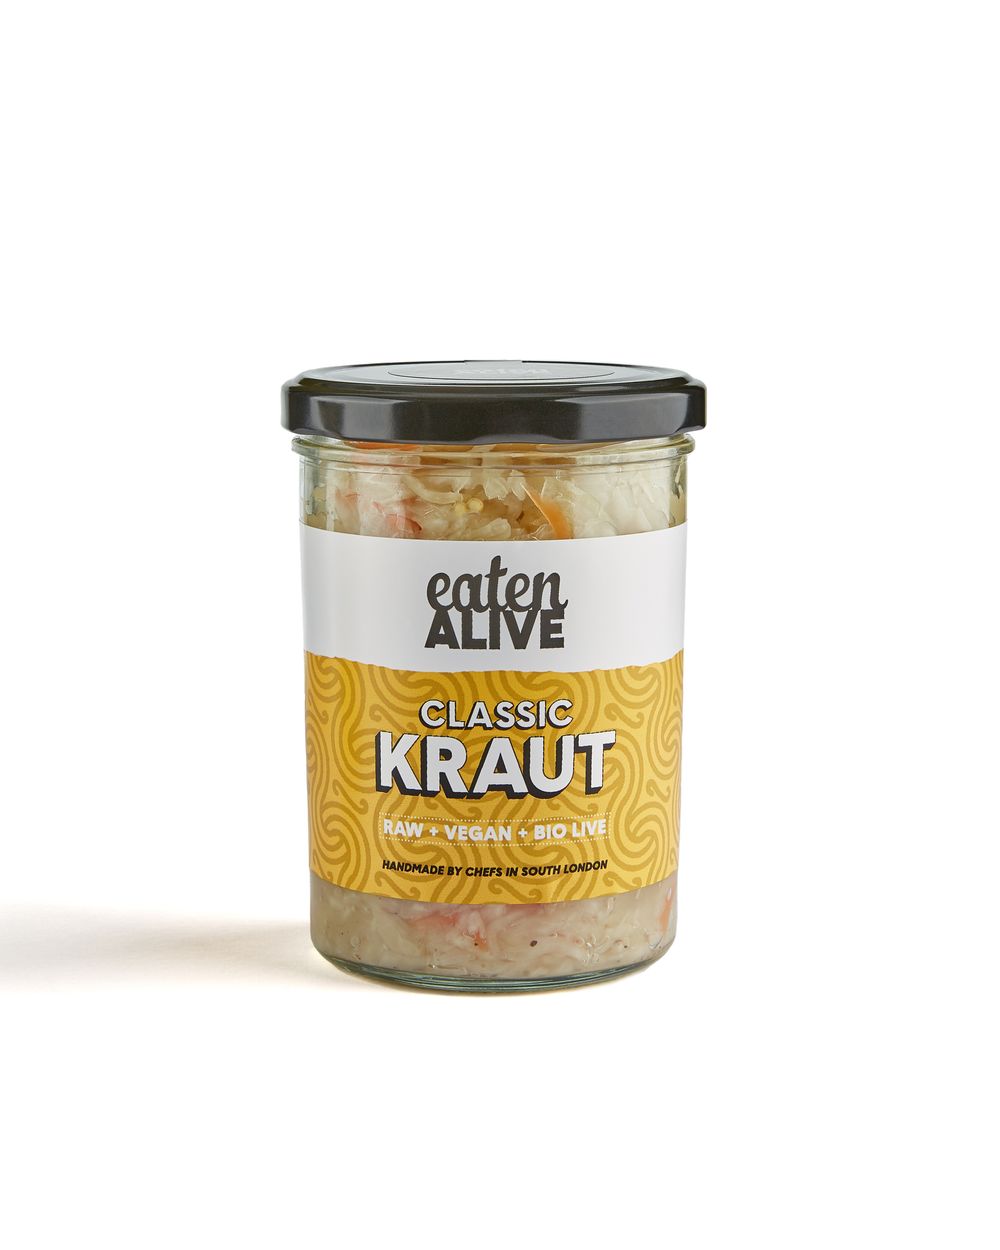 Classic Kraut - eaten-alive